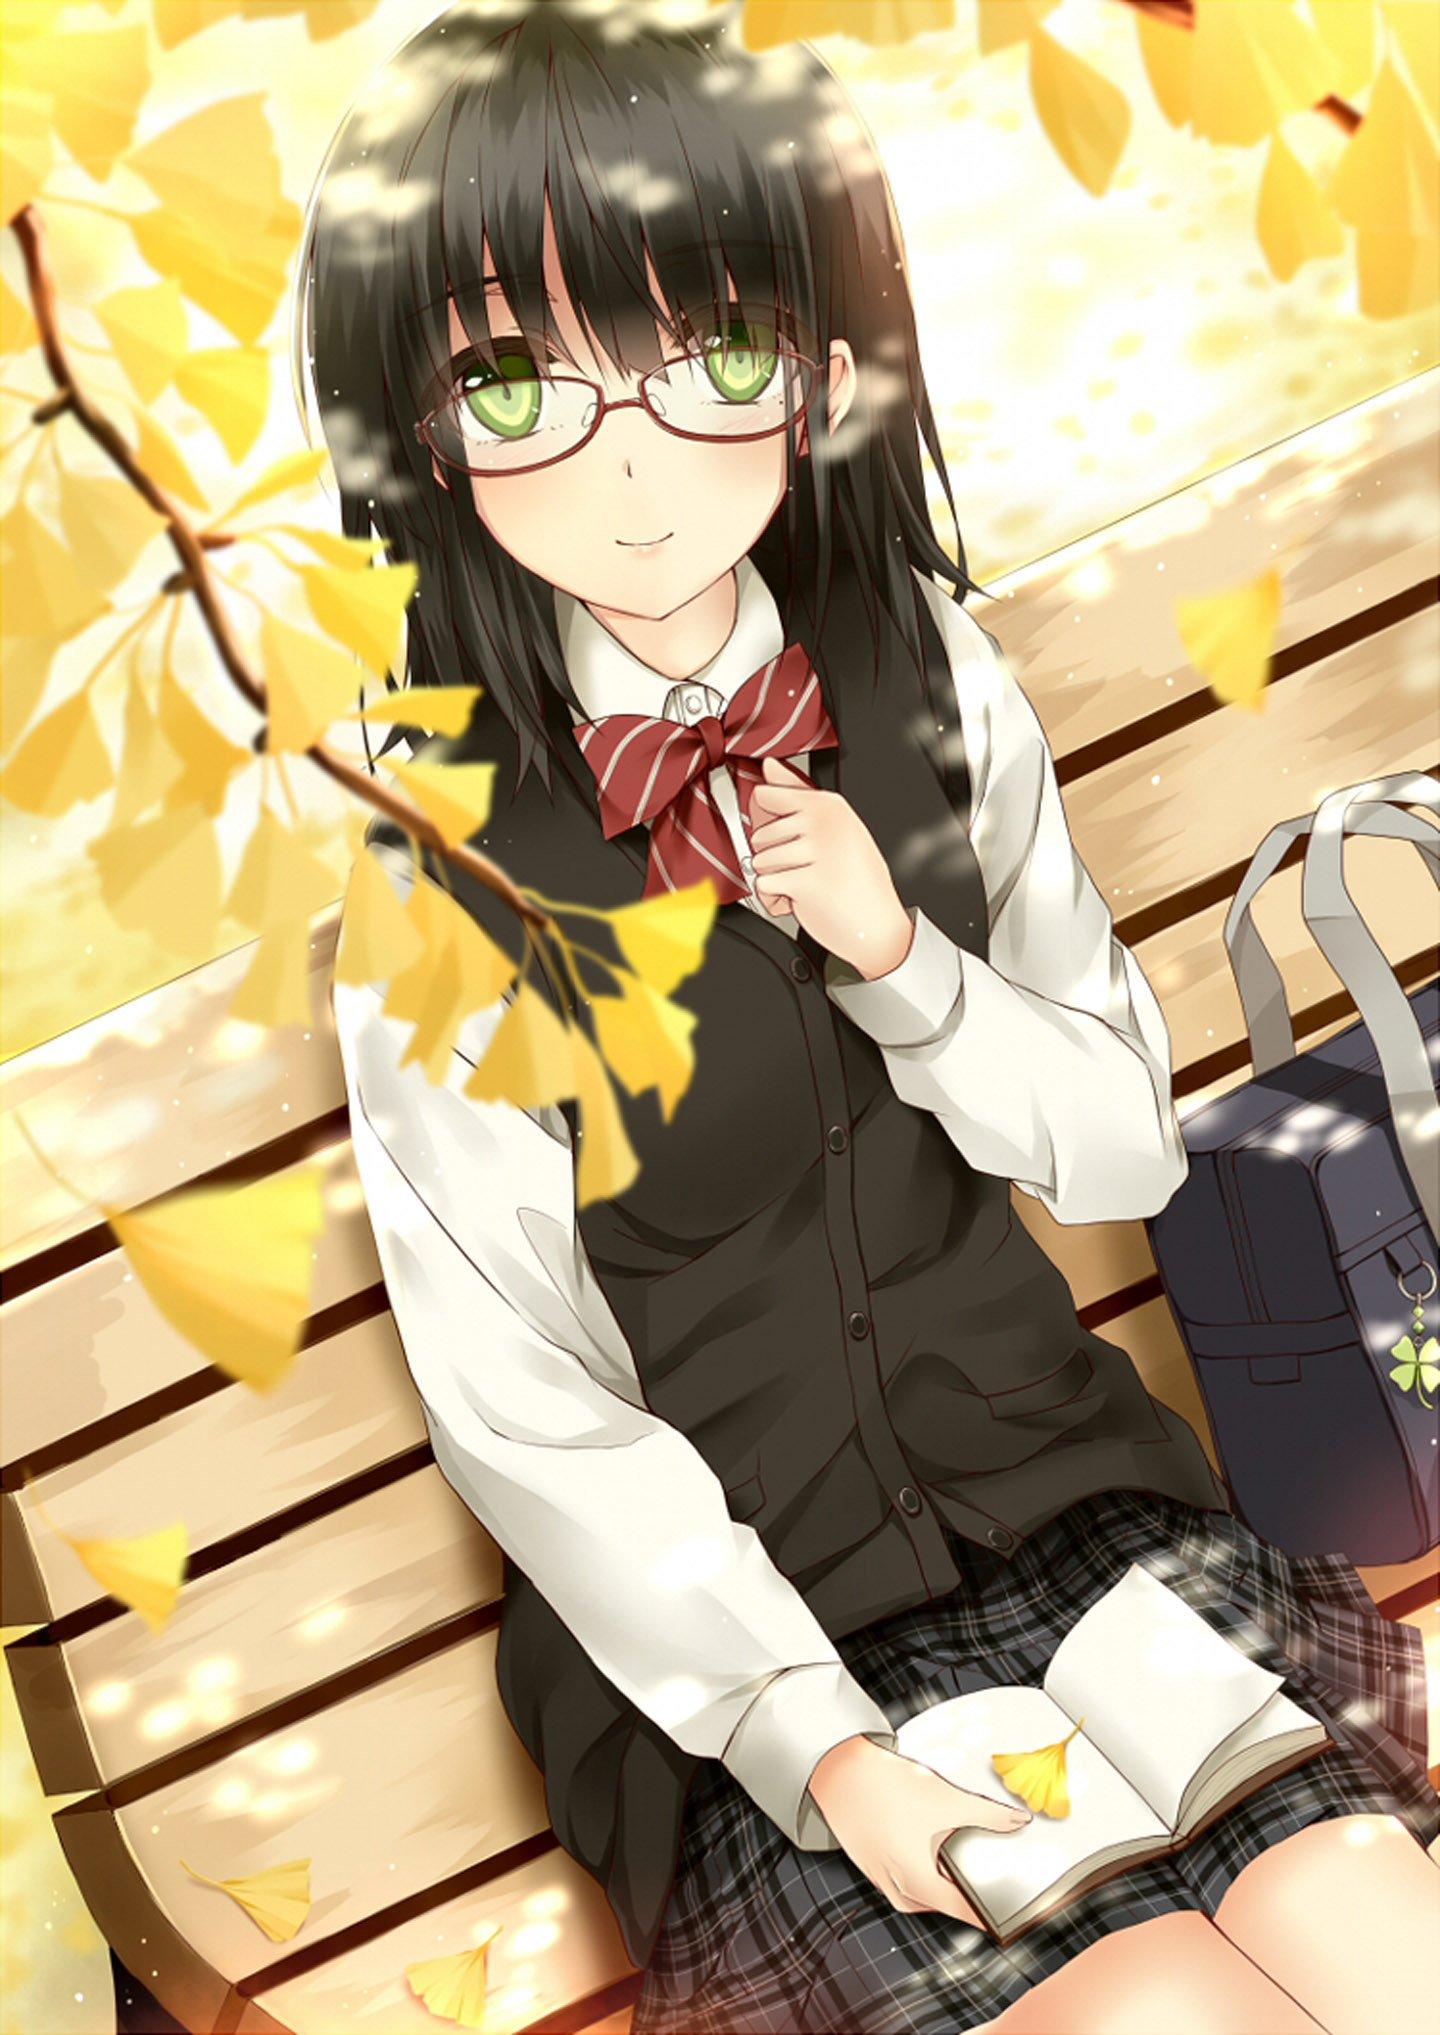 Original anime girl school uniform autumn leaves cute